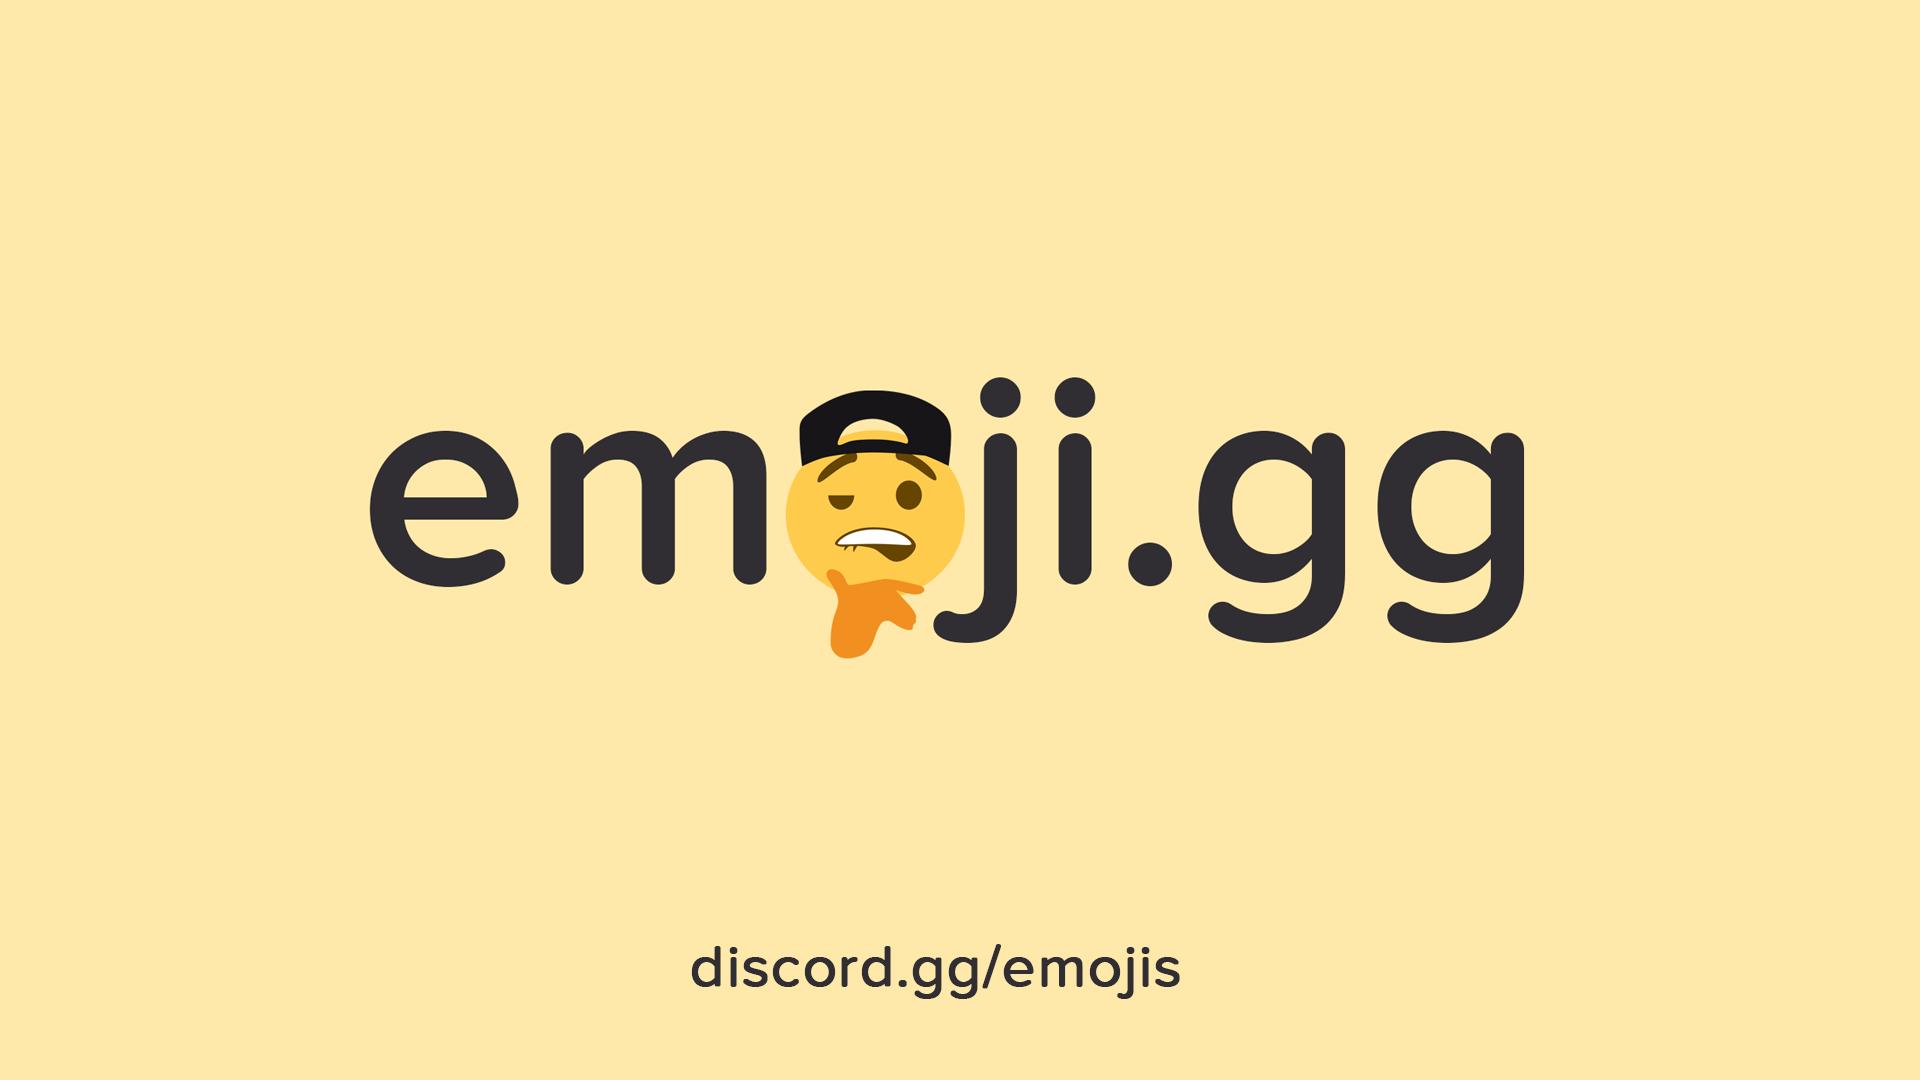 Discovery splash banner for 🎄 Emoji.gg | Discord Emojis, Servers & Bots ★ Nitro Emotes, Stickers, Anime, Themes, Art, 0 Egirl Discord server